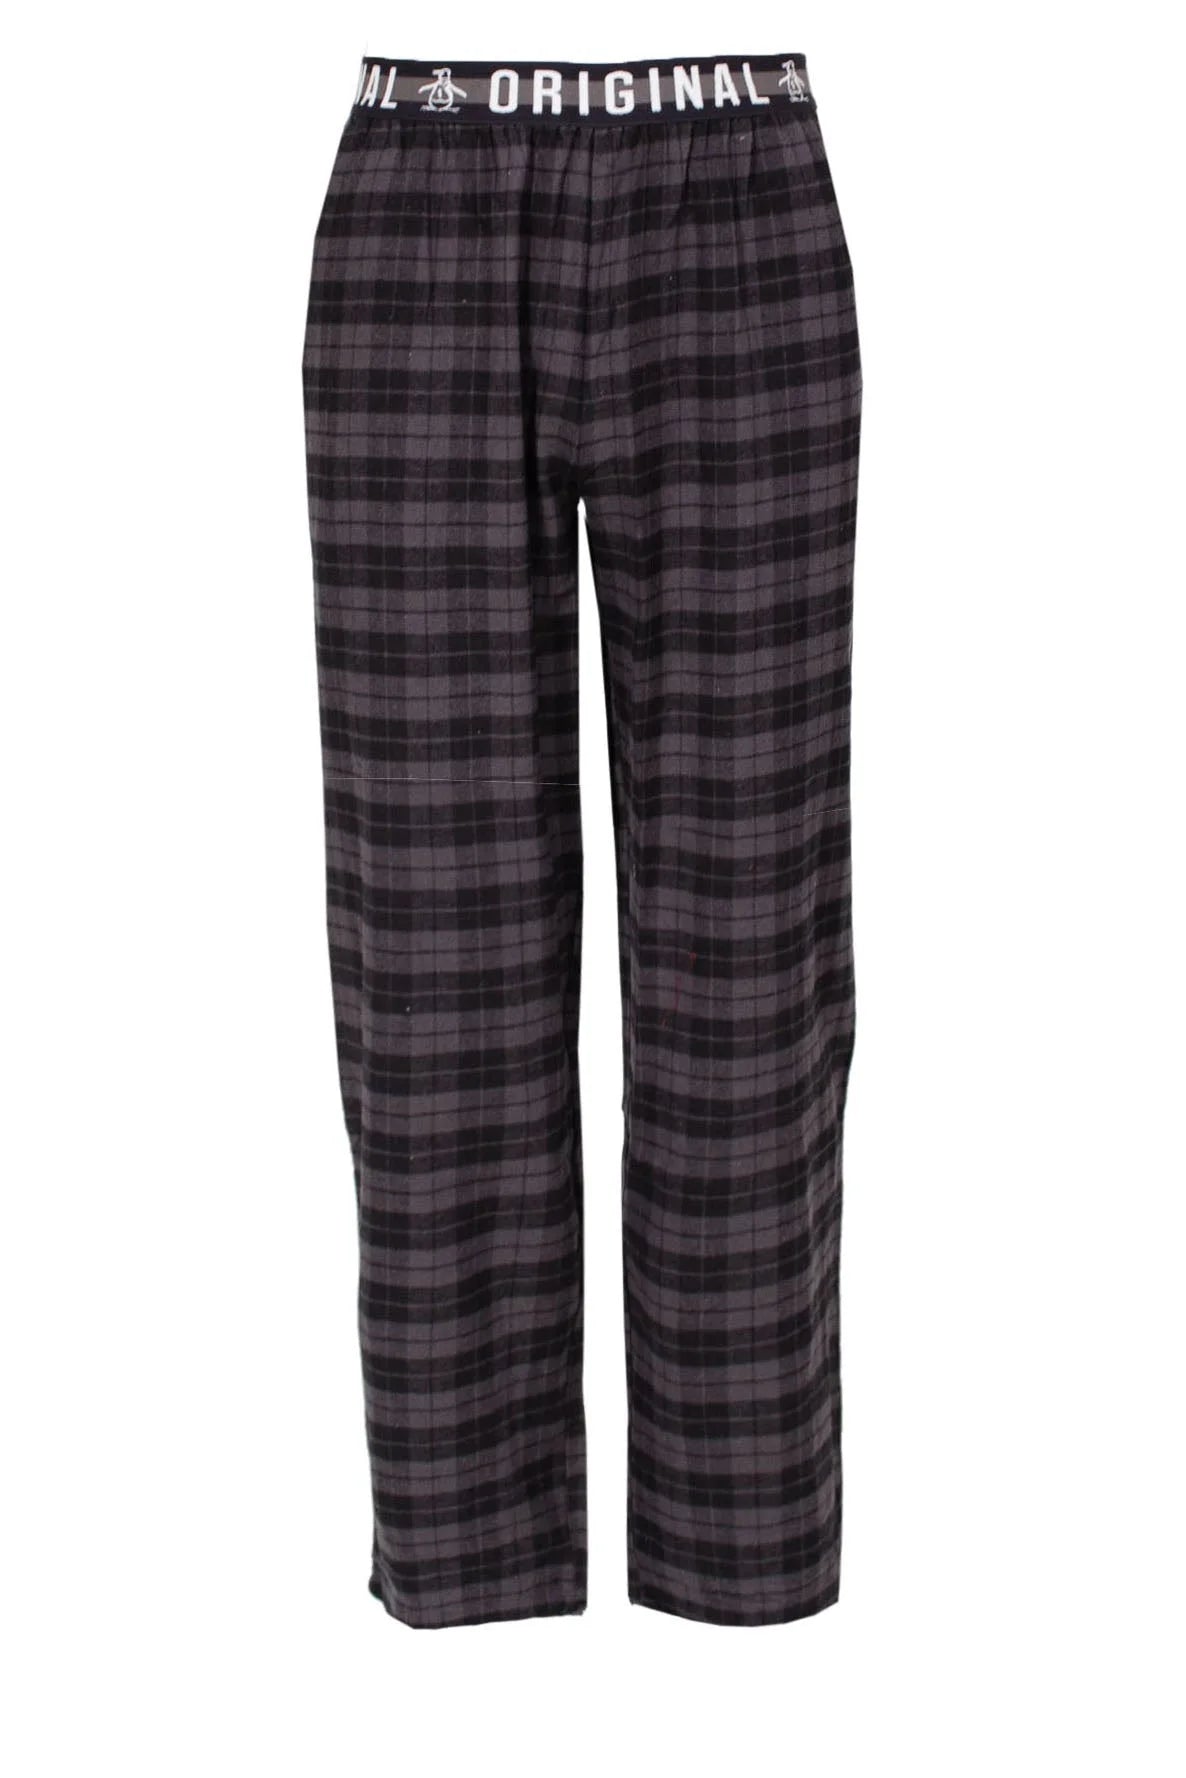 Penguin Cotton Check Pyjama Lounge Pants Black/Grey / M